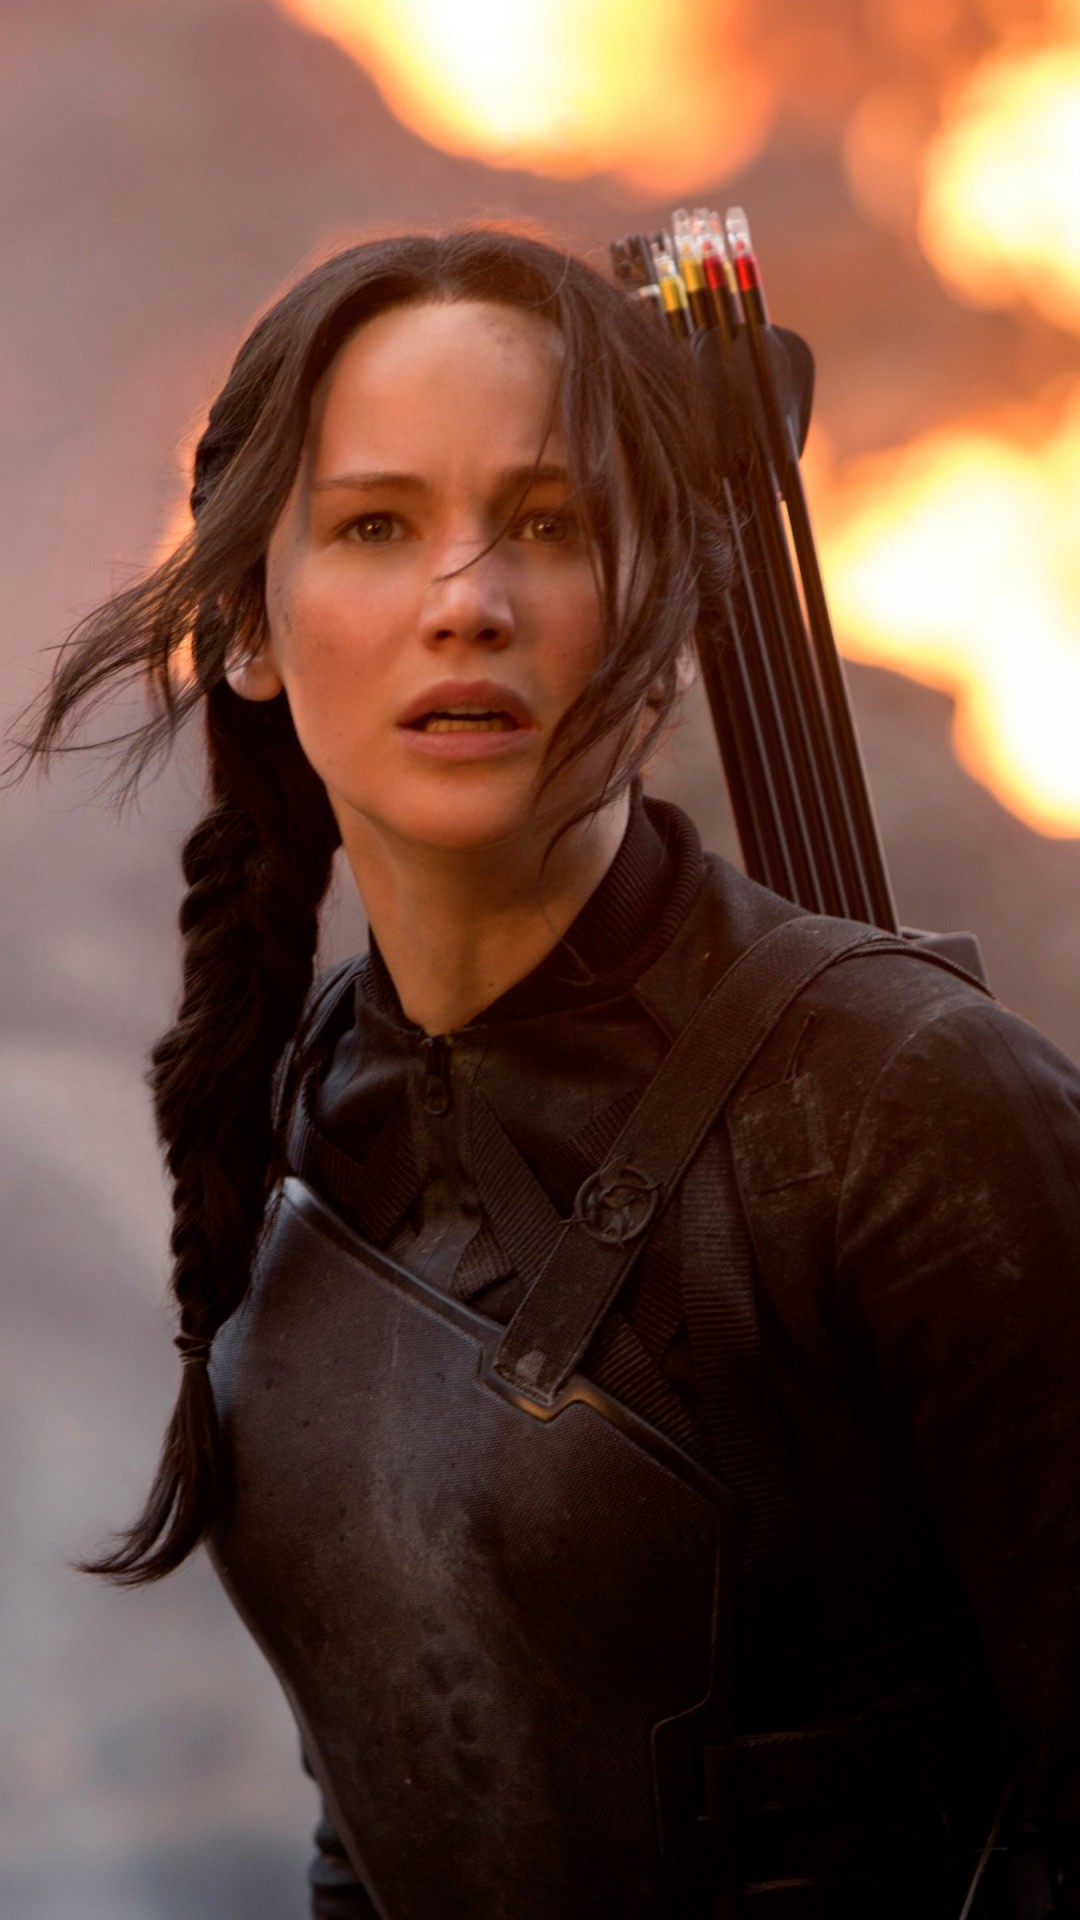 Jennifer Lawrence in The Hunger Games Wallpaper for Google Nexus 5X